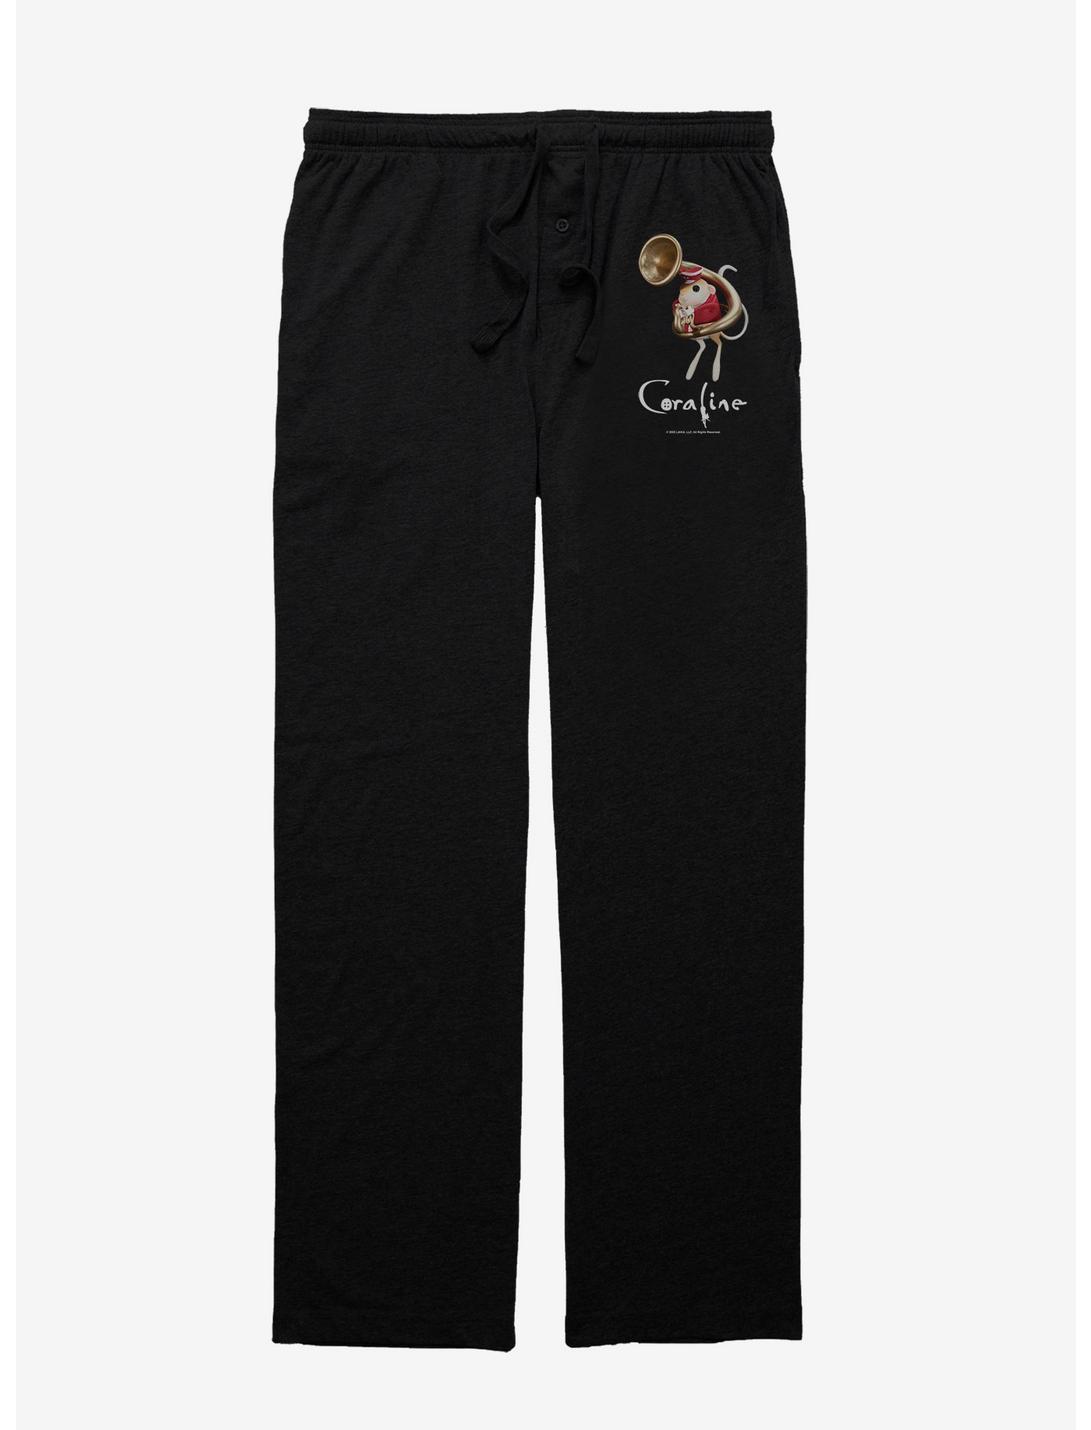 Coraline Circus Mouse Sousaphone Pajama Pants, BLACK, hi-res